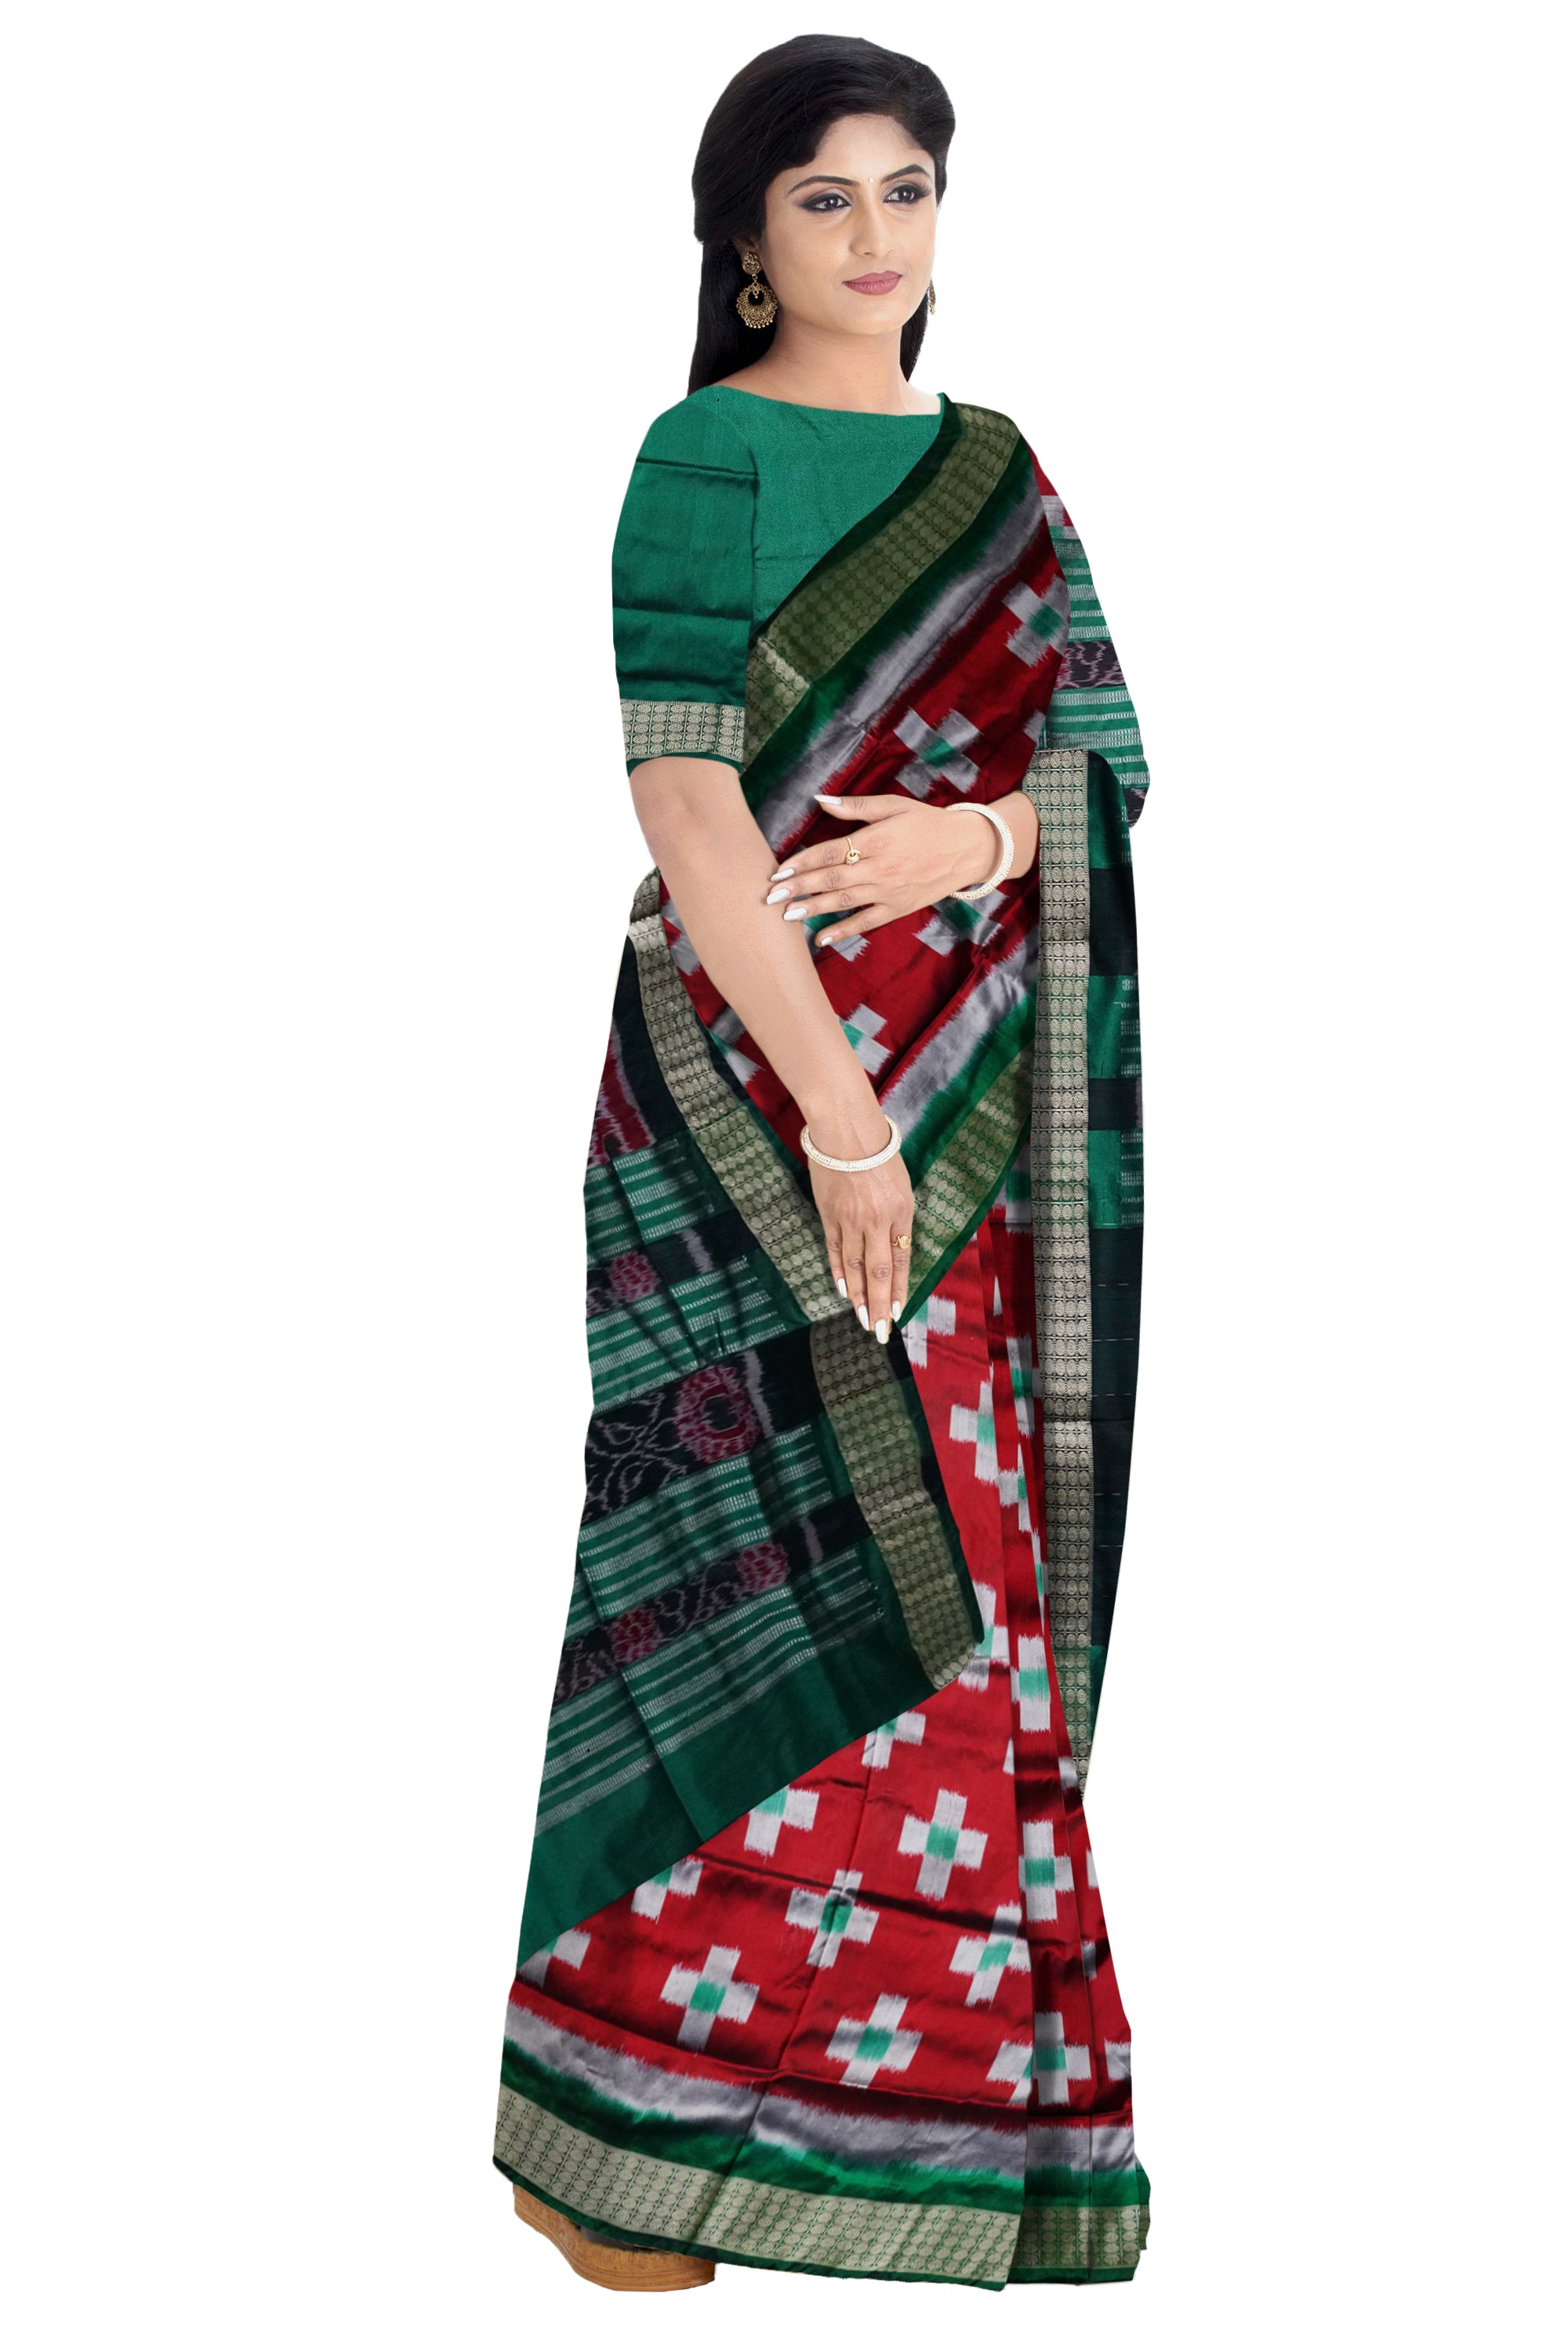 Maroon & Green color tara pattern pata saree. - Koshali Arts & Crafts Enterprise